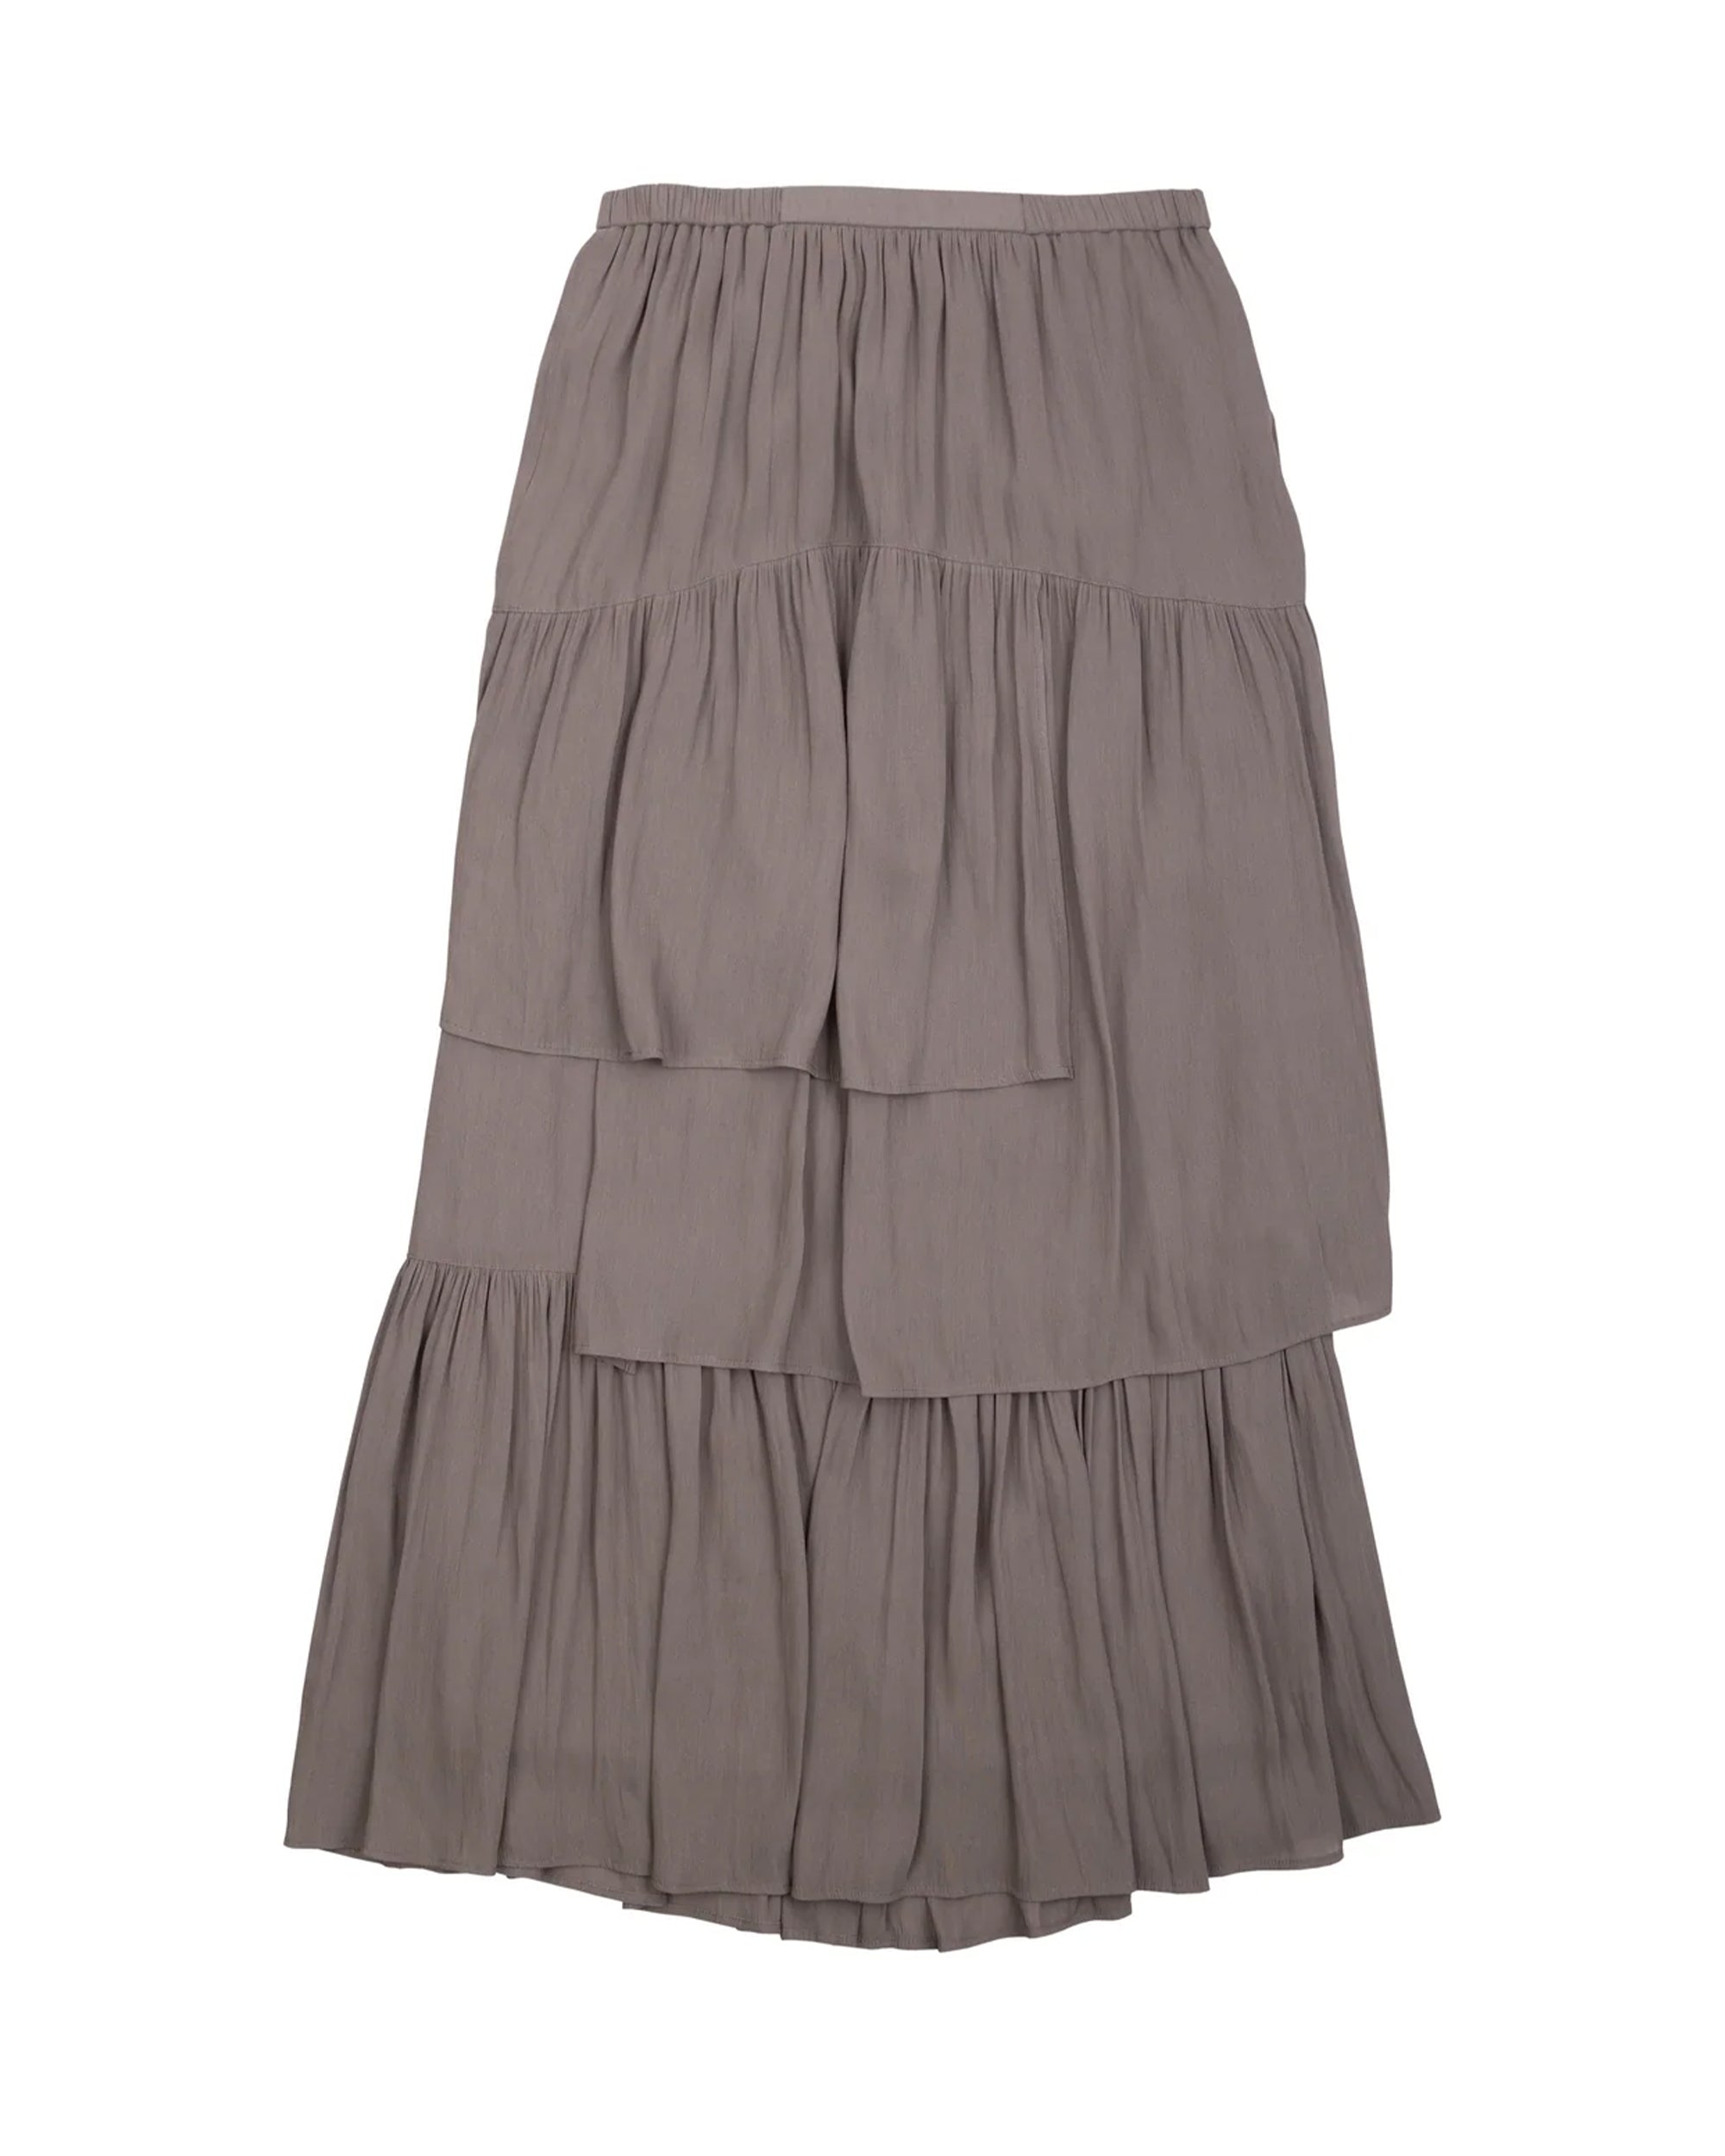 NORAH SUE Multi Layer Skirt